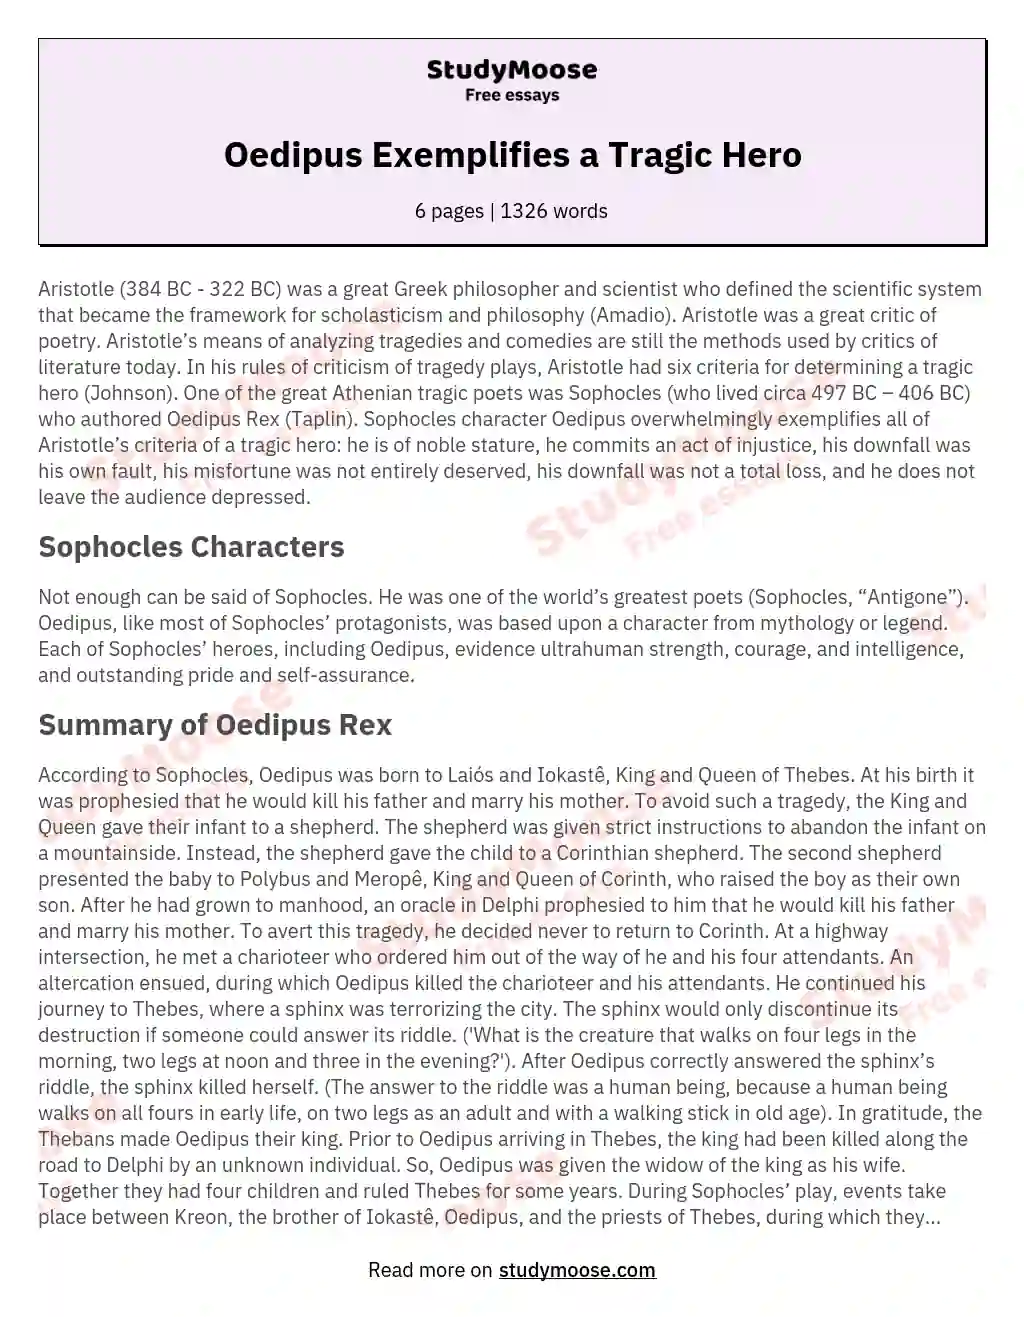 Oedipus Exemplifies a Tragic Hero essay